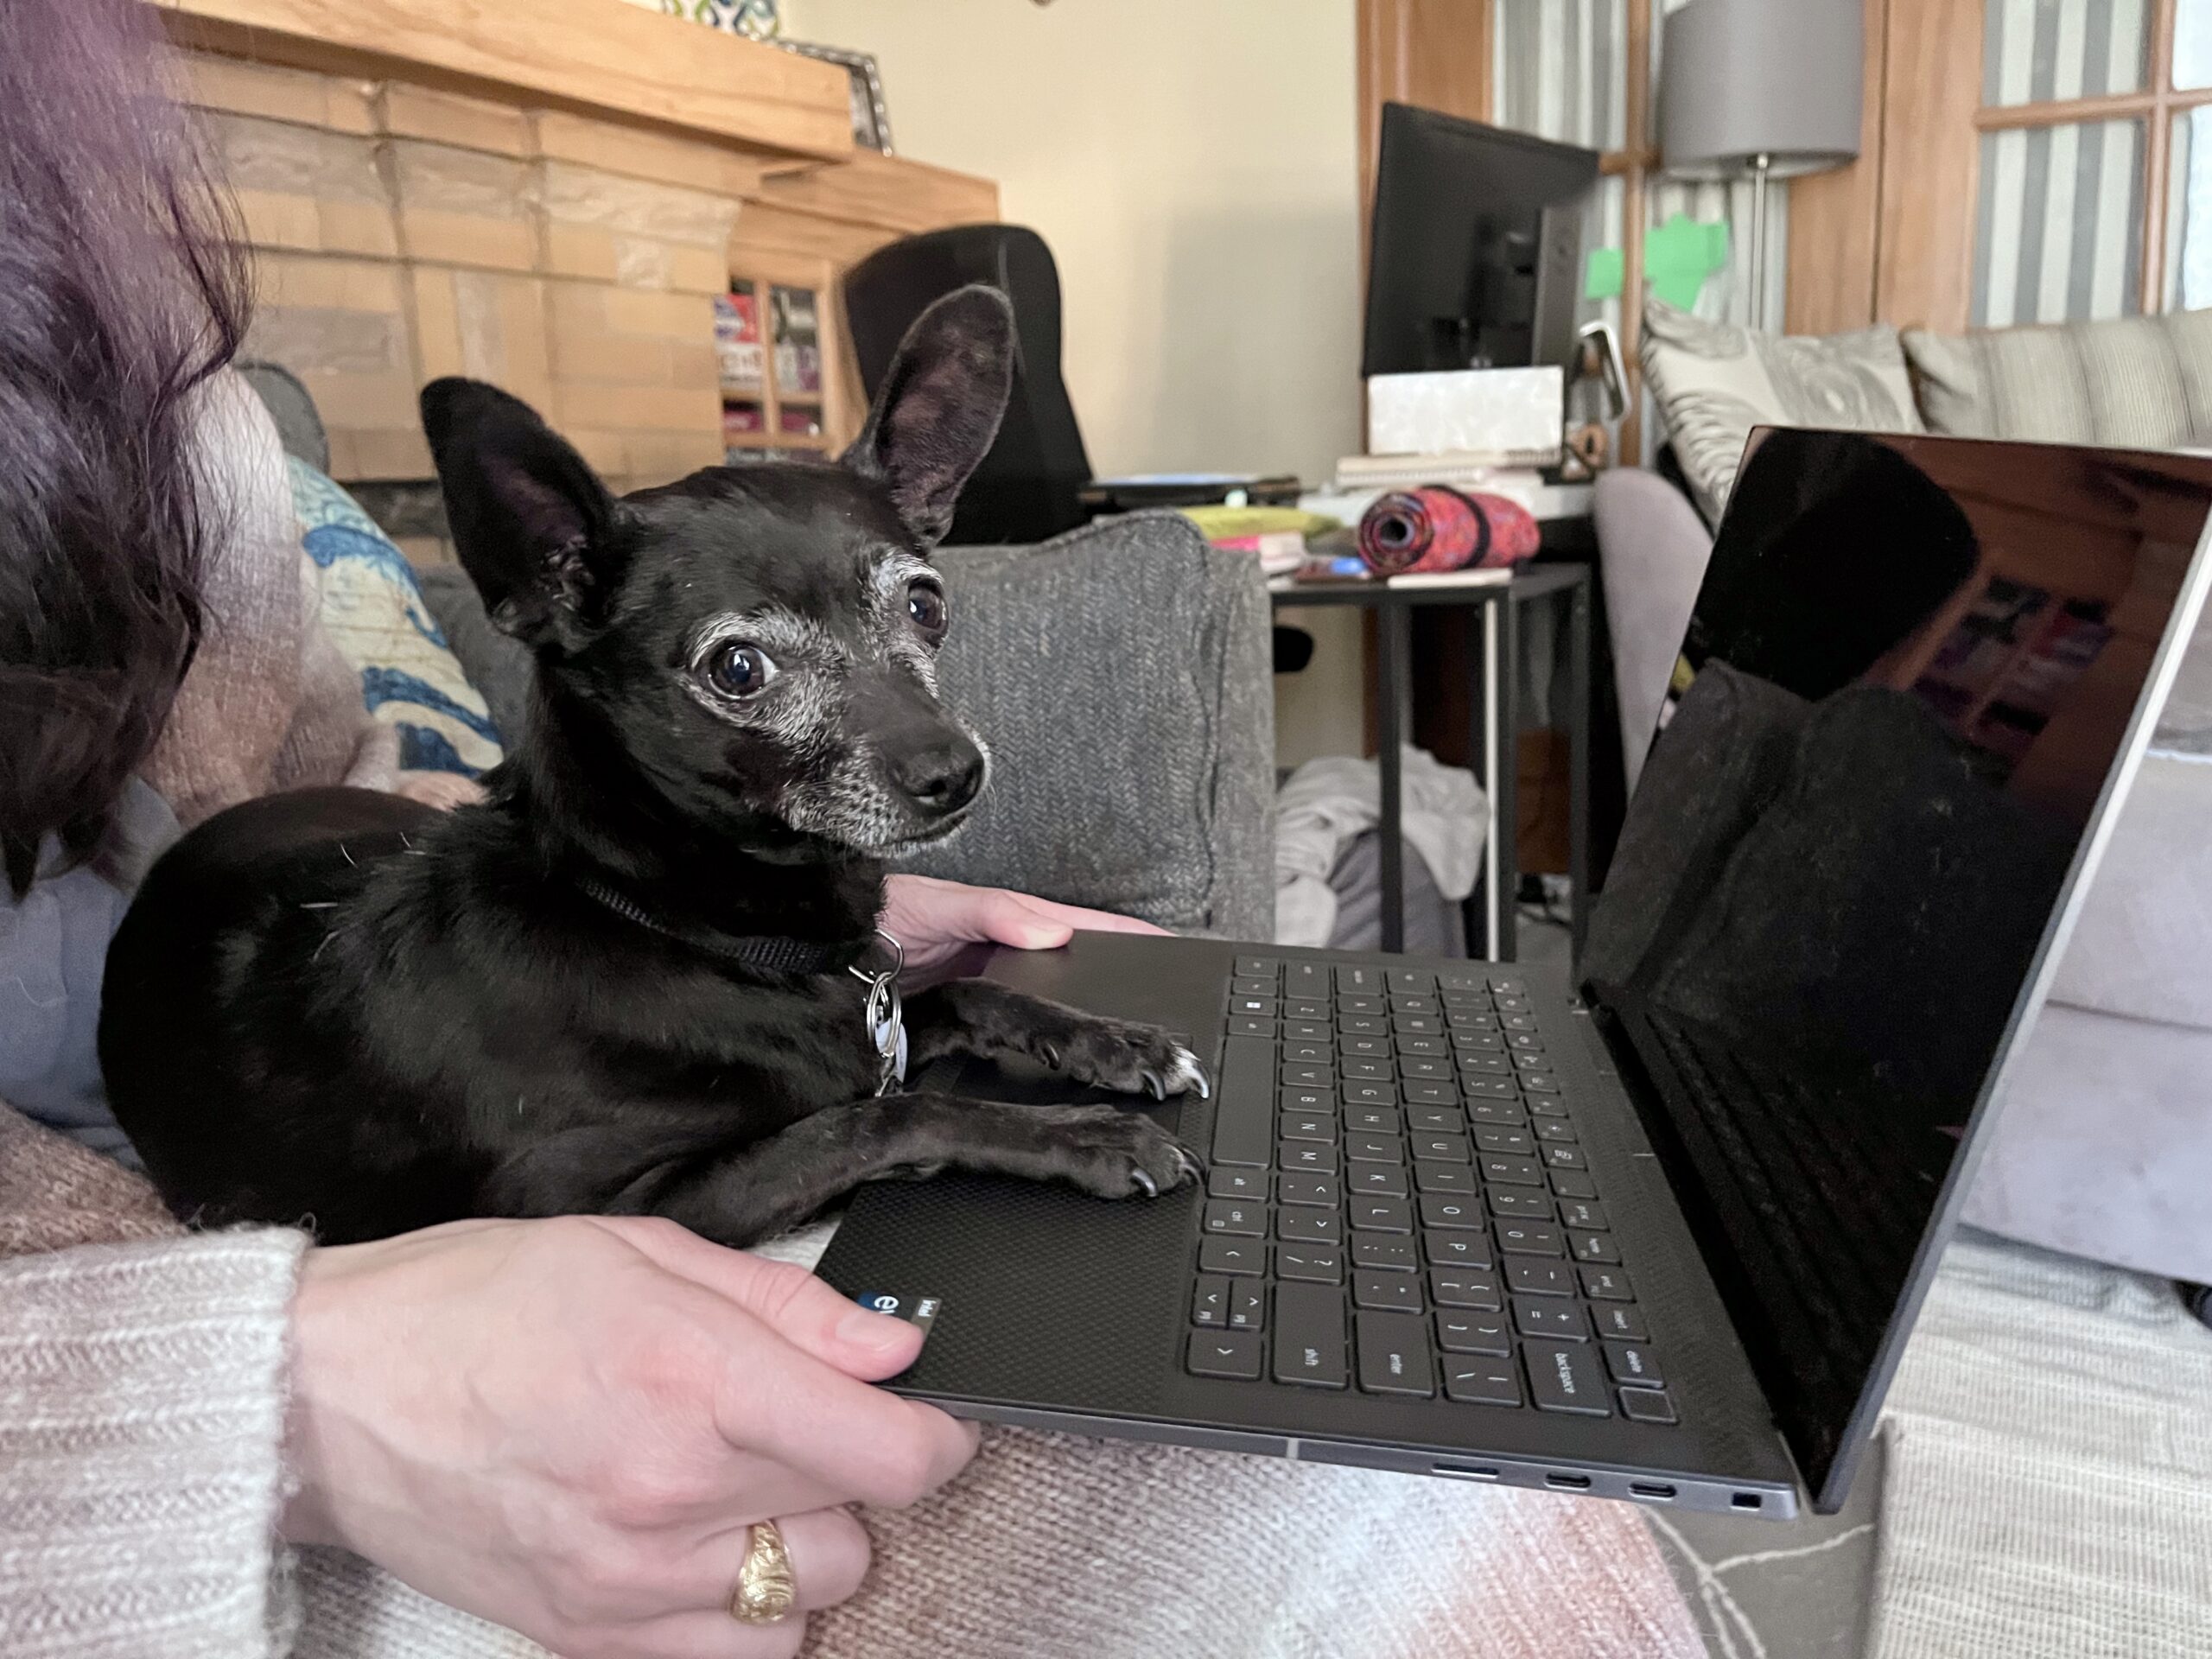 Dog at a laptop